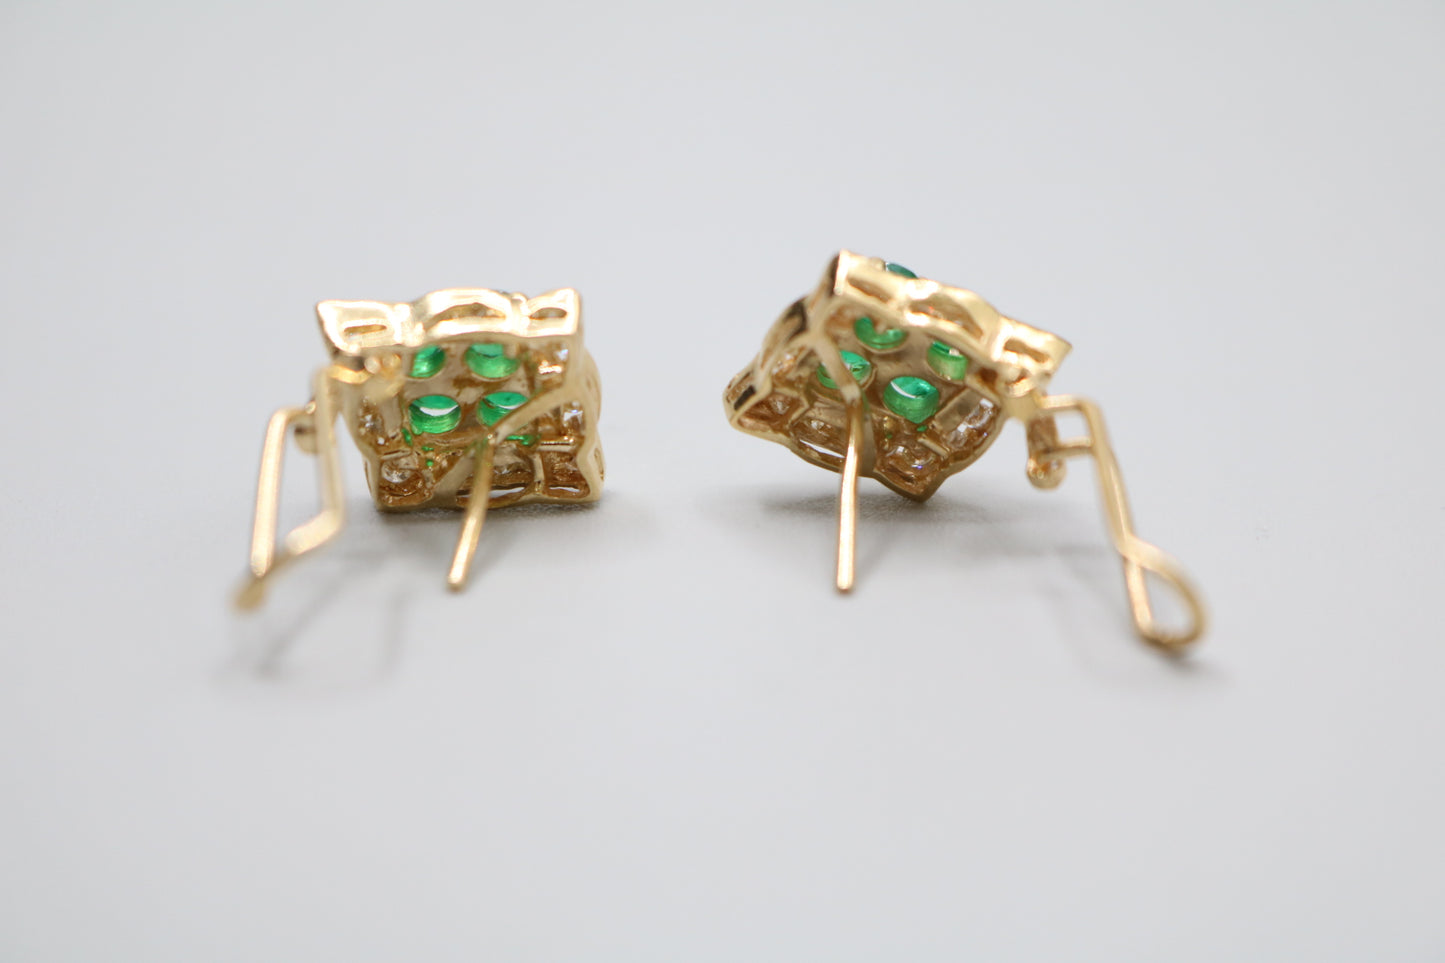 18K Yellow Gold Natural Emerald & Diamond Clipons Pair Earrings